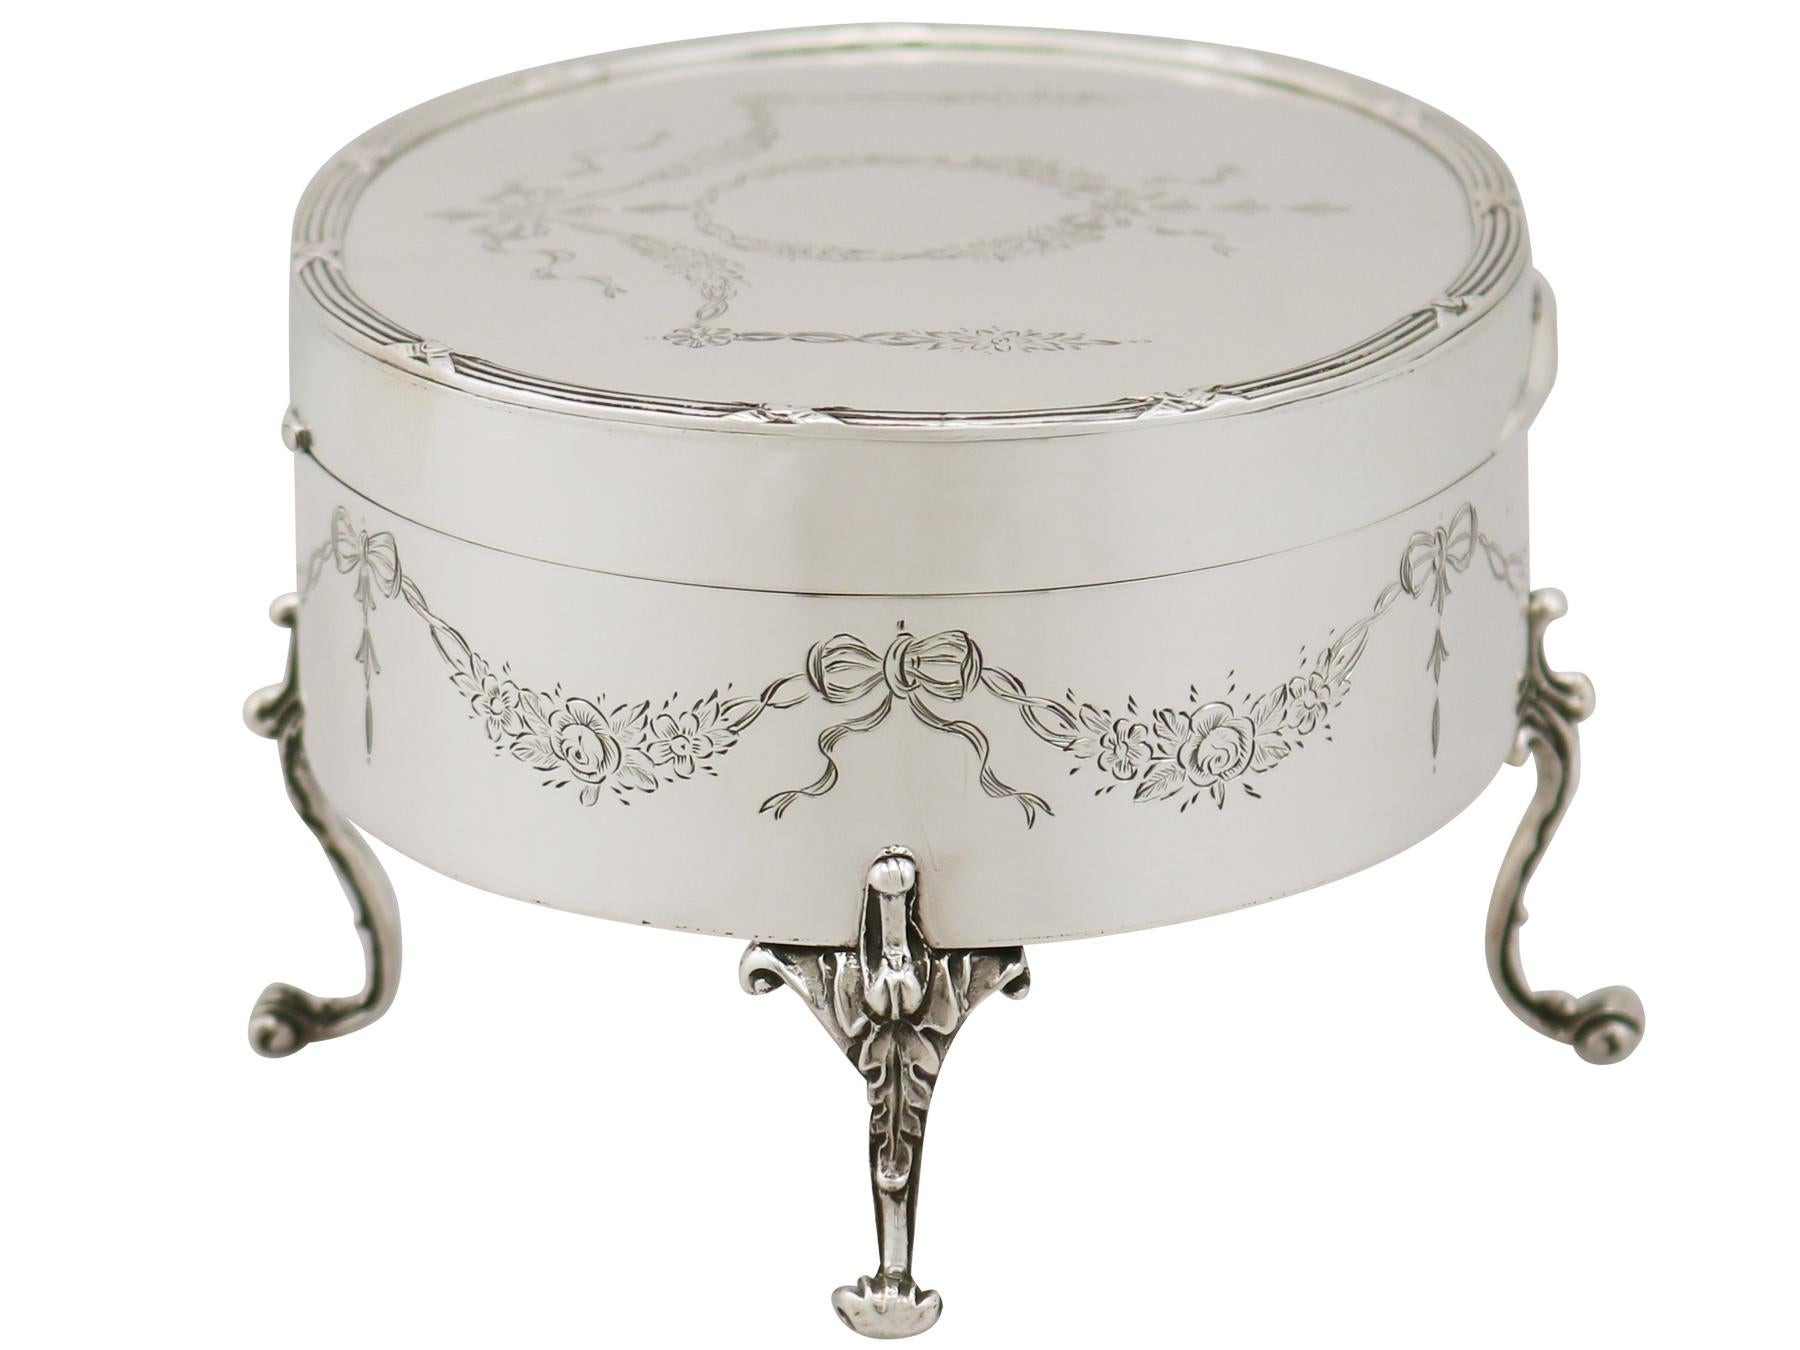 English 1906 Sterling Silver Jewelry or Trinket Box by Goldsmiths & Silversmiths Co Ltd